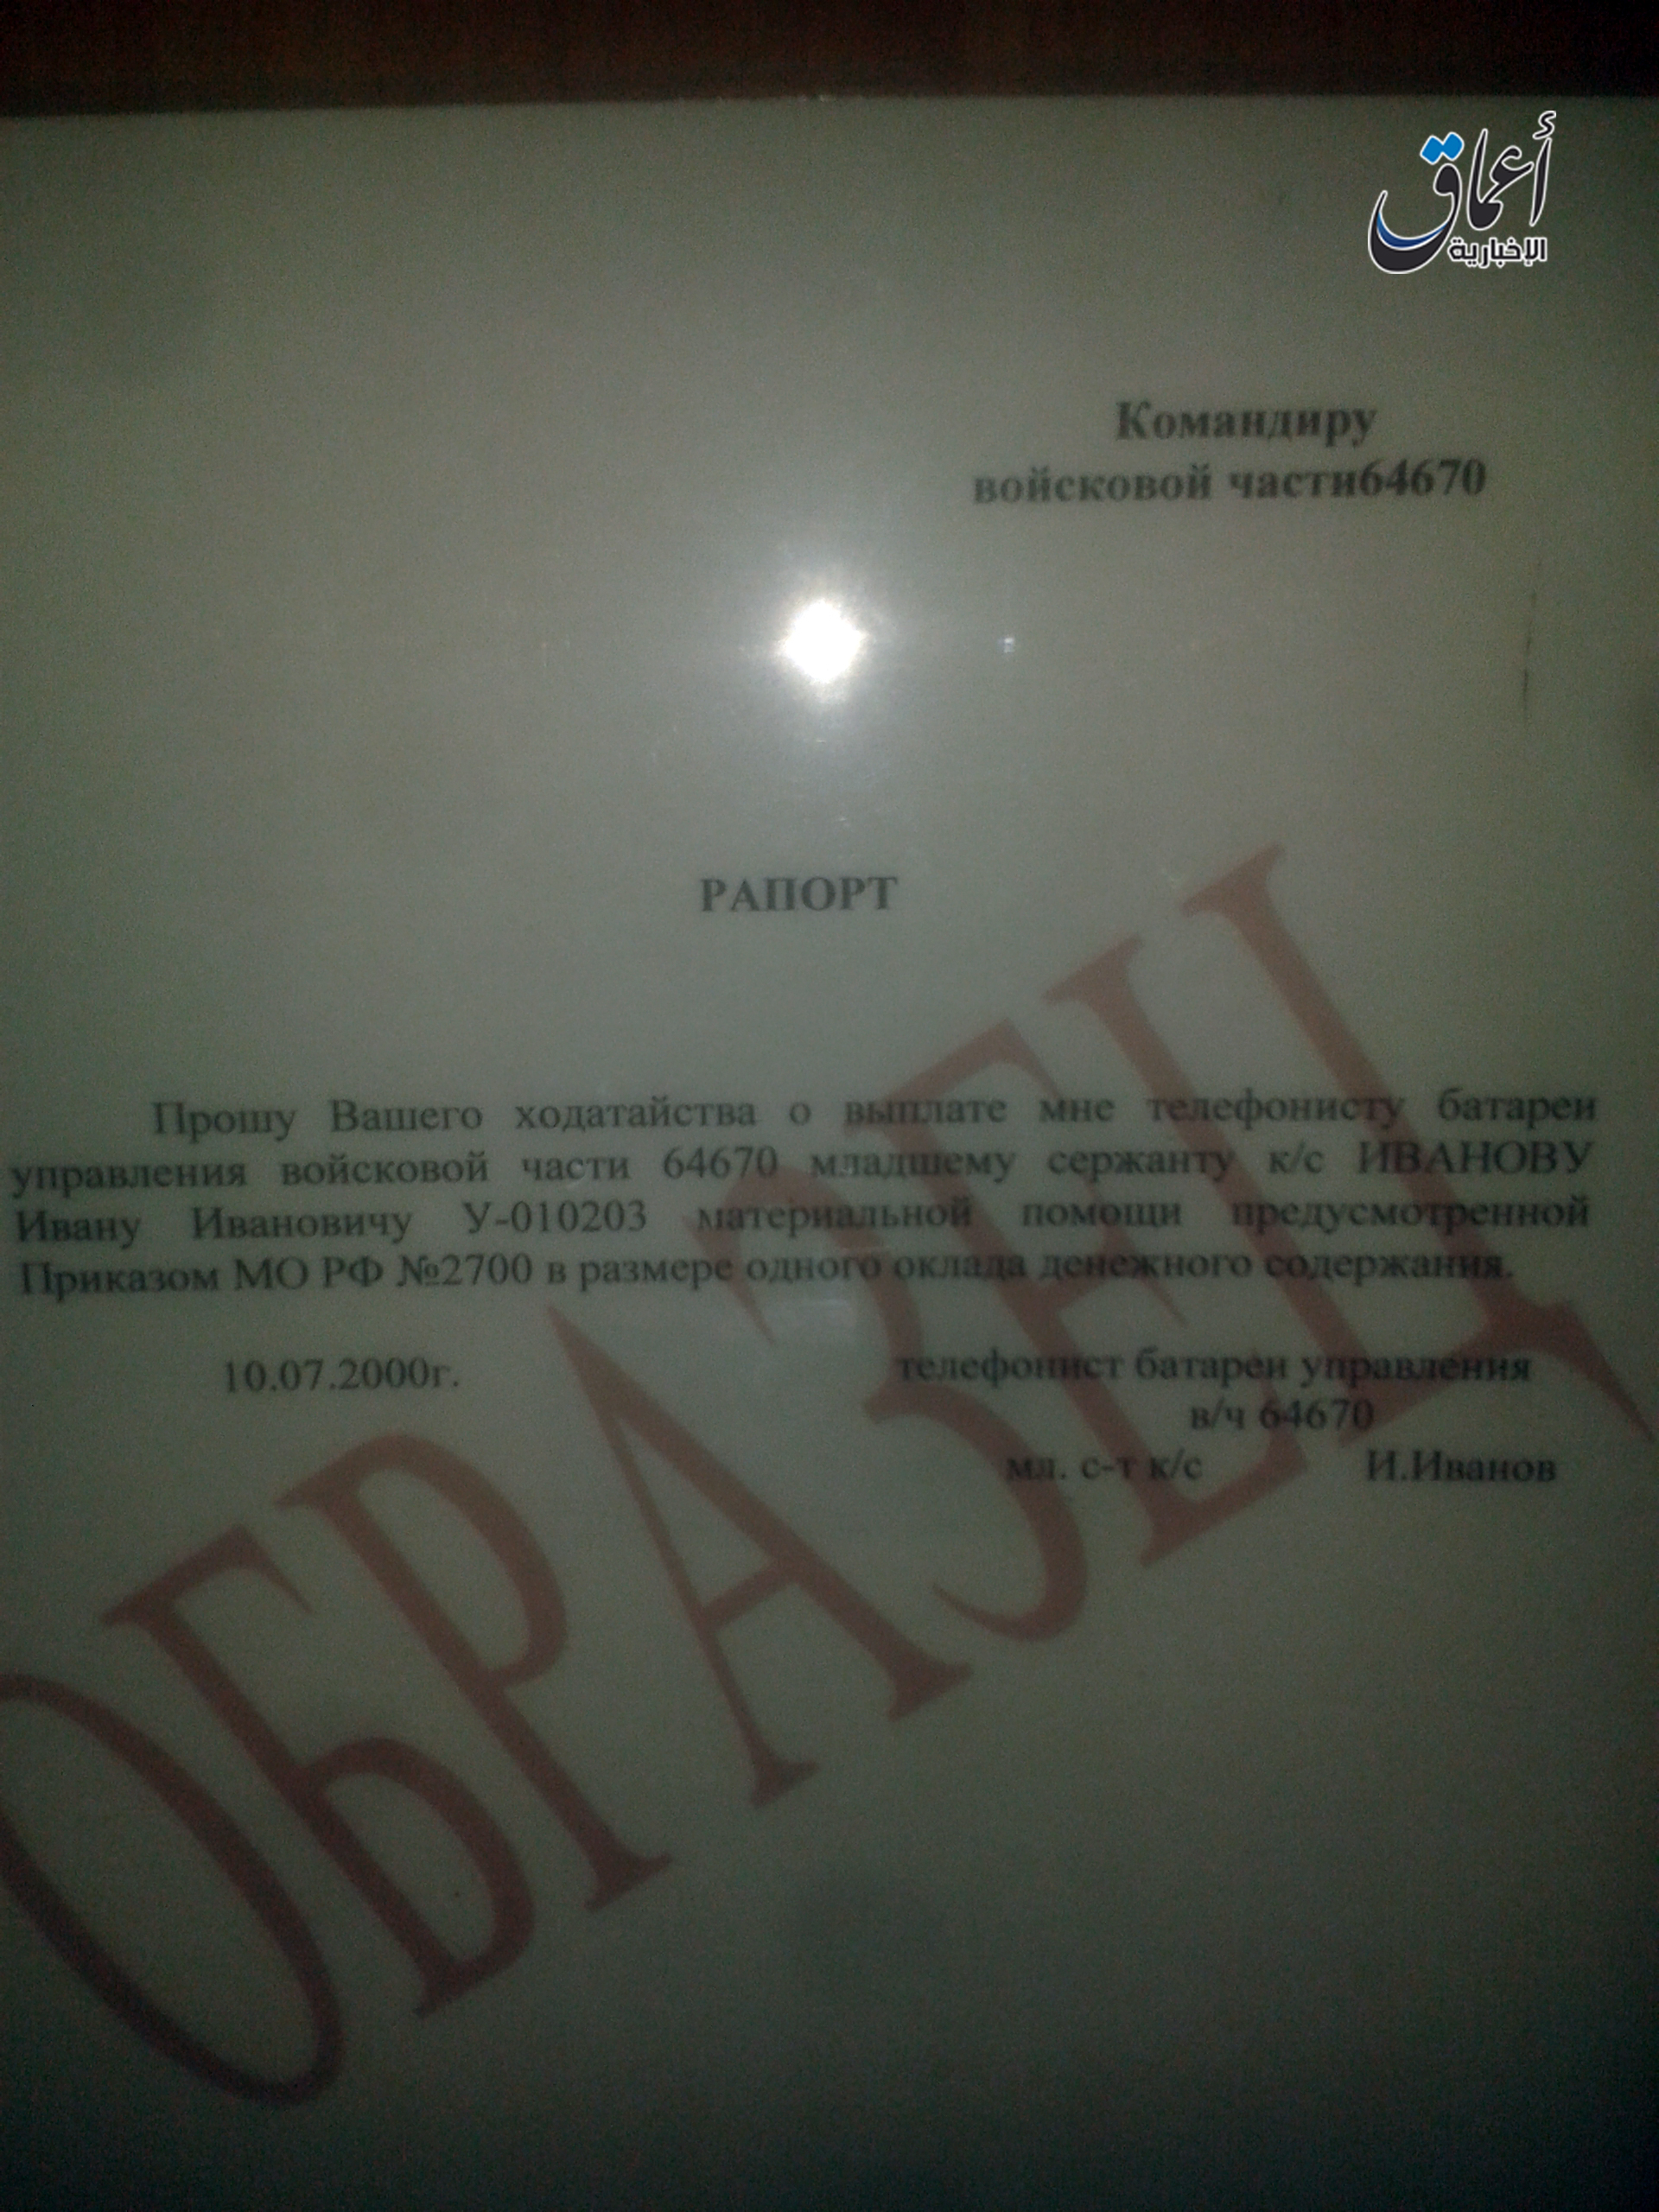 Russian-document-1.jpg